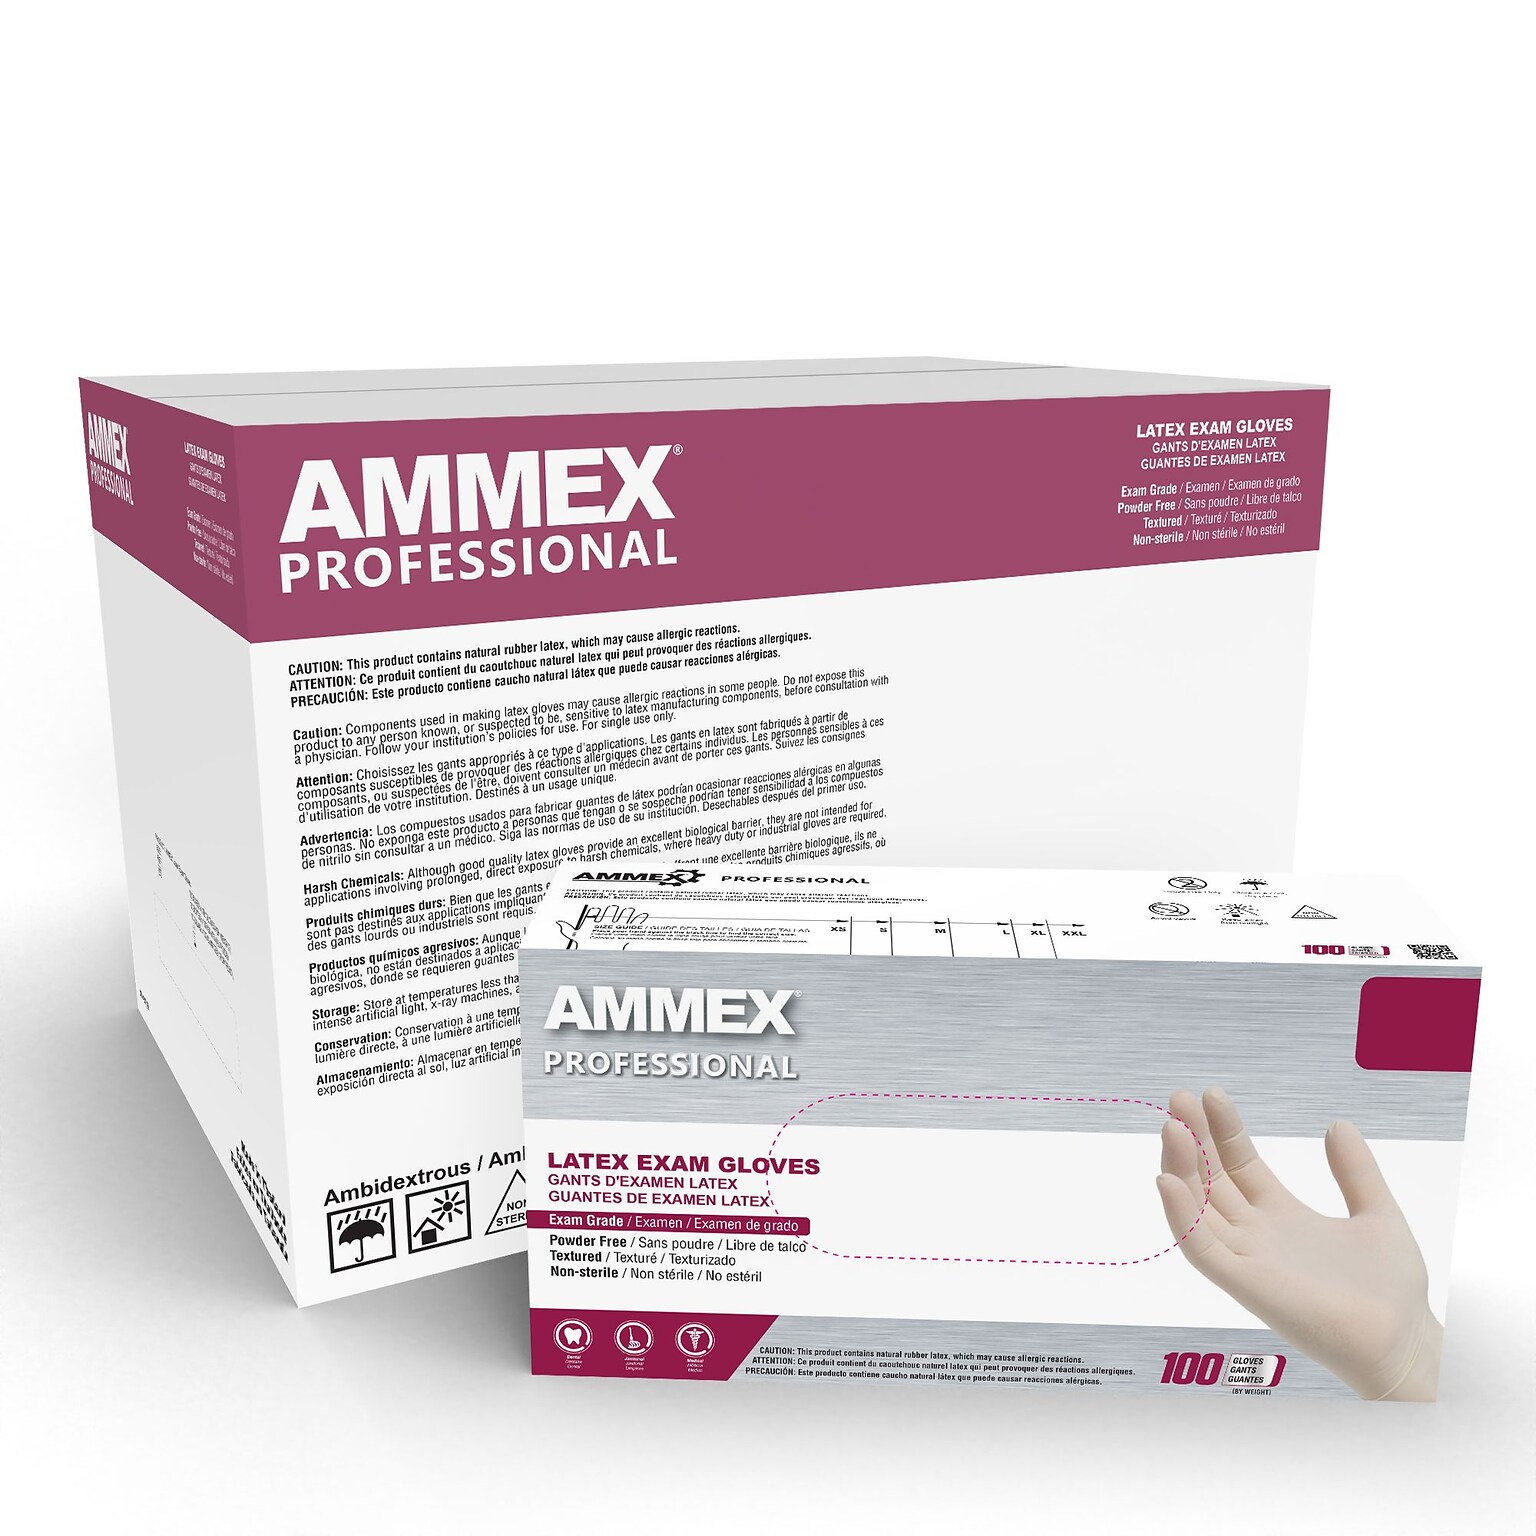 Ammex Professional GPPFT Powder Free Latex Exam Gloves, Ivory, Large, 100 Gloves/Box, 10 Box/Carton (GPPFT46100XX)